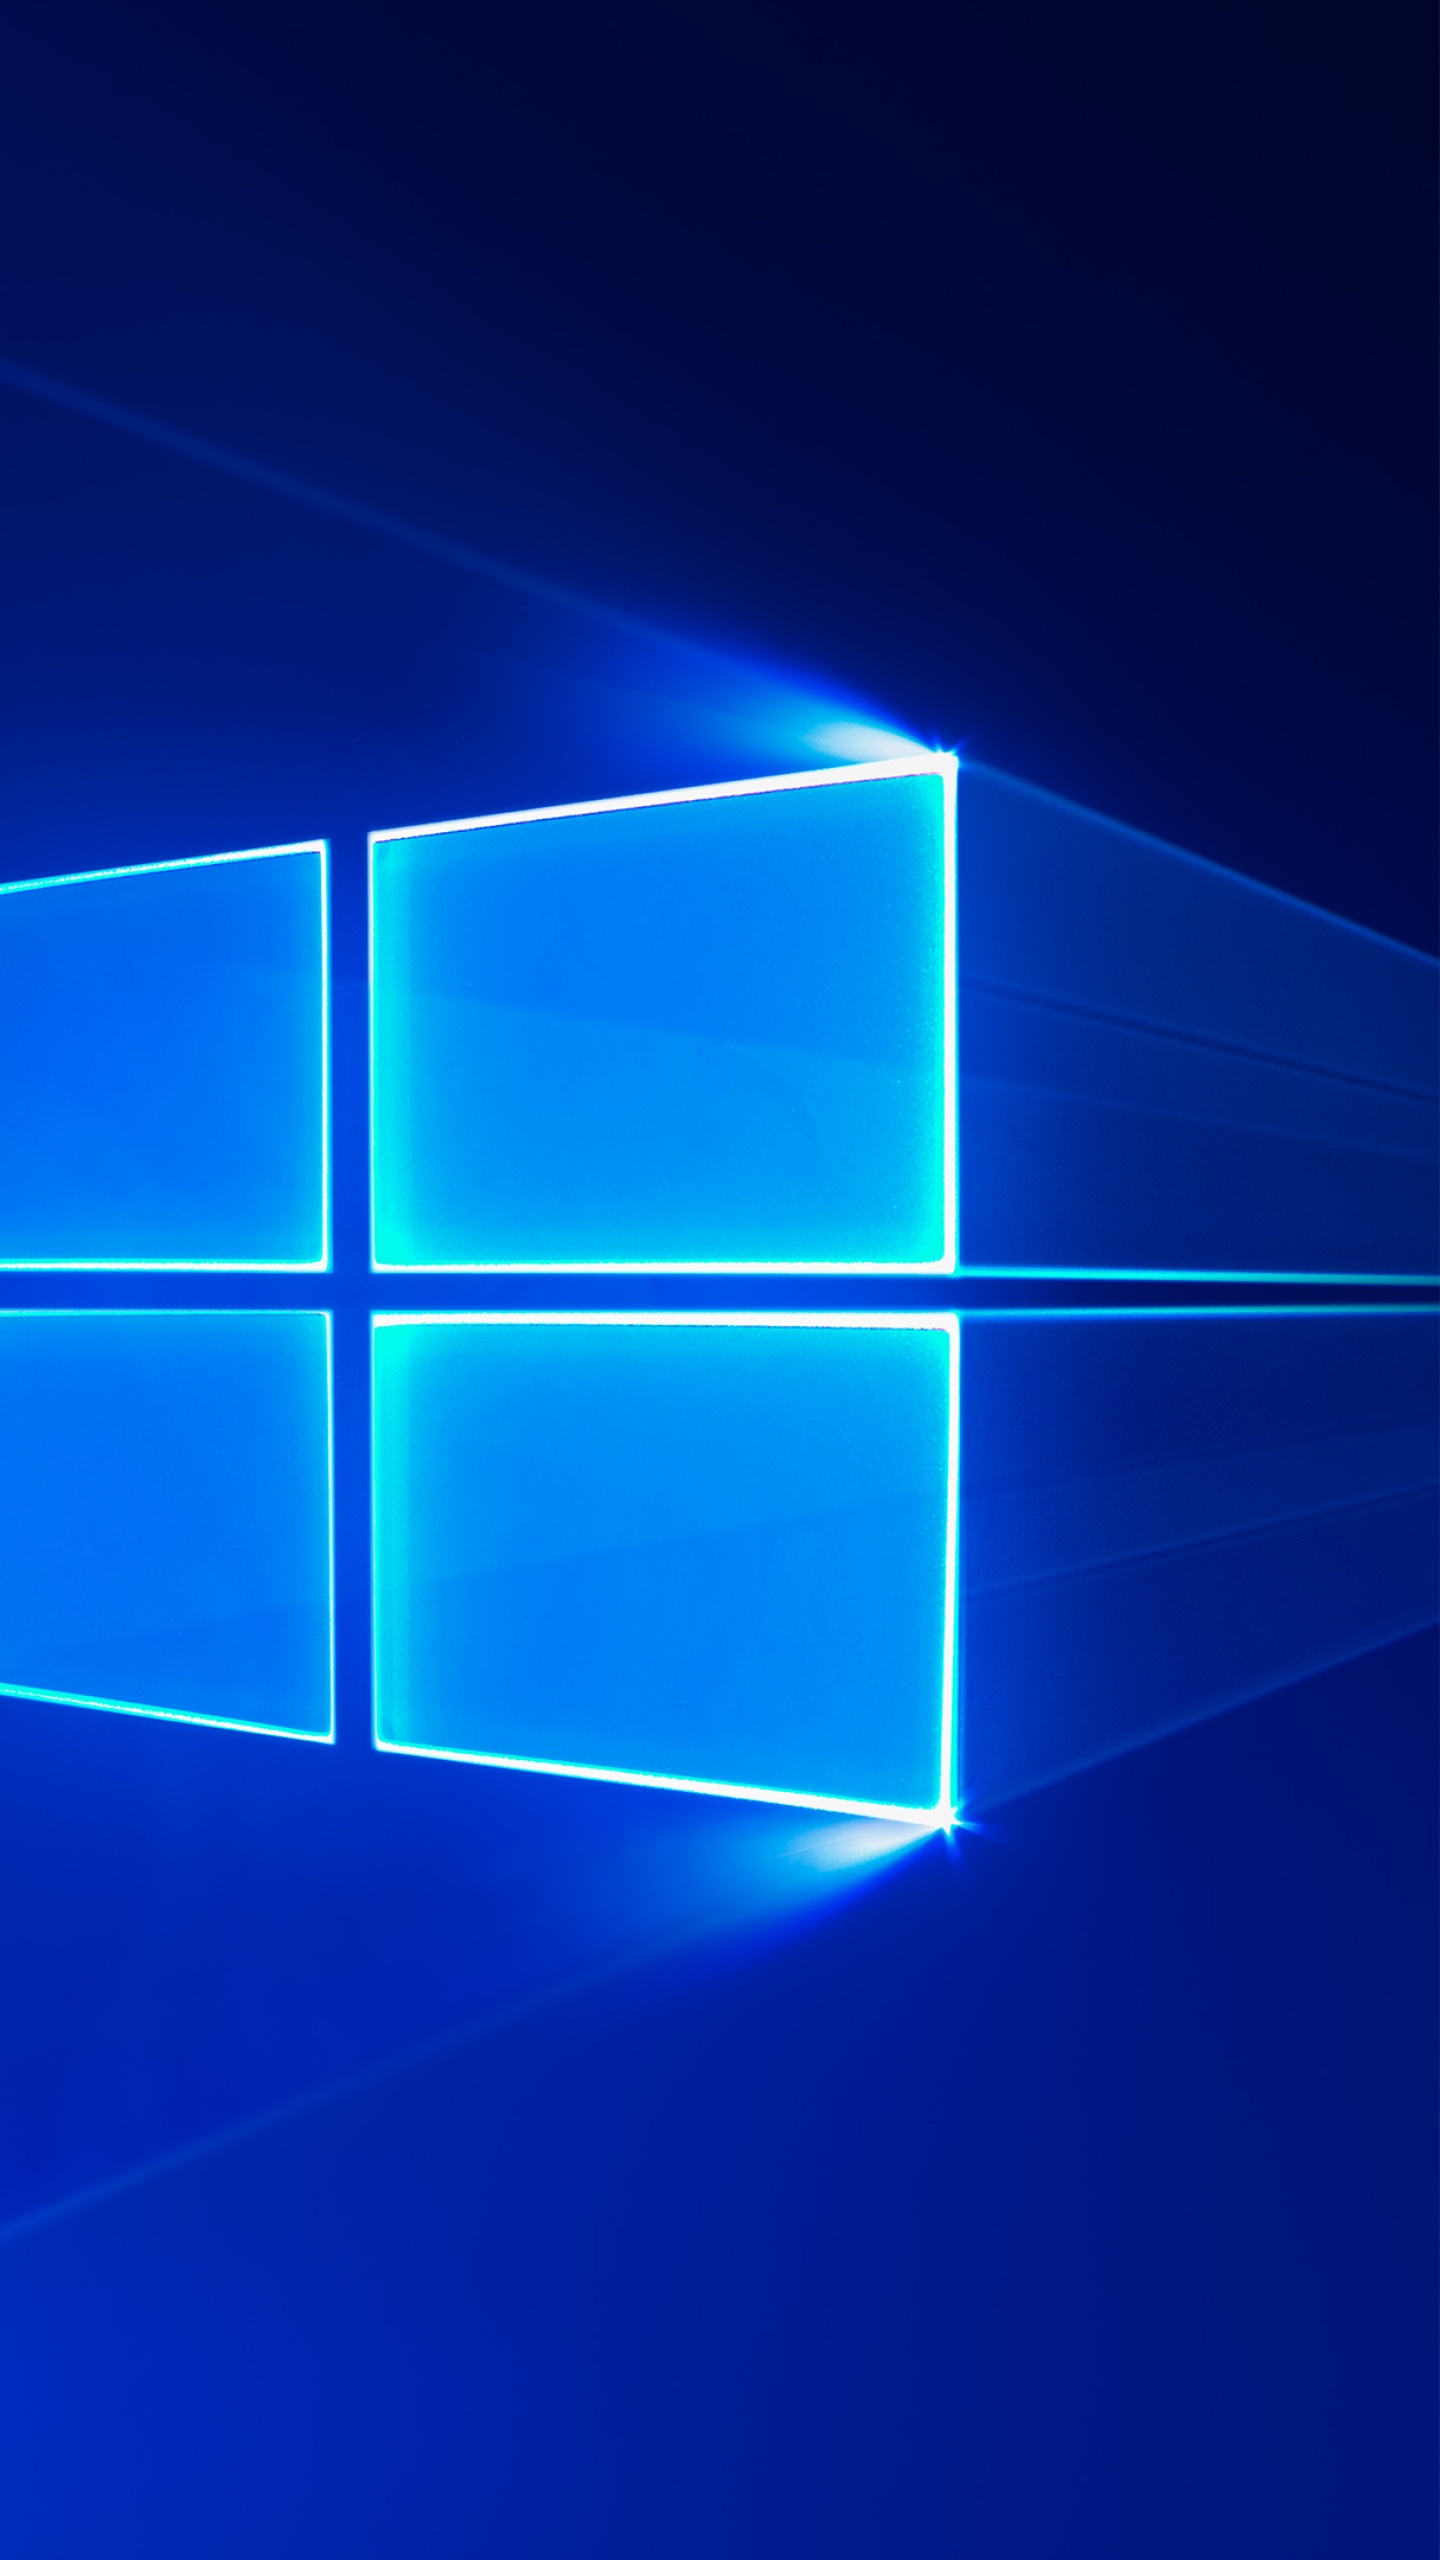 Windows 10 4K Wallpaper, Microsoft Windows, Blue, Glossy, Technology, #1555